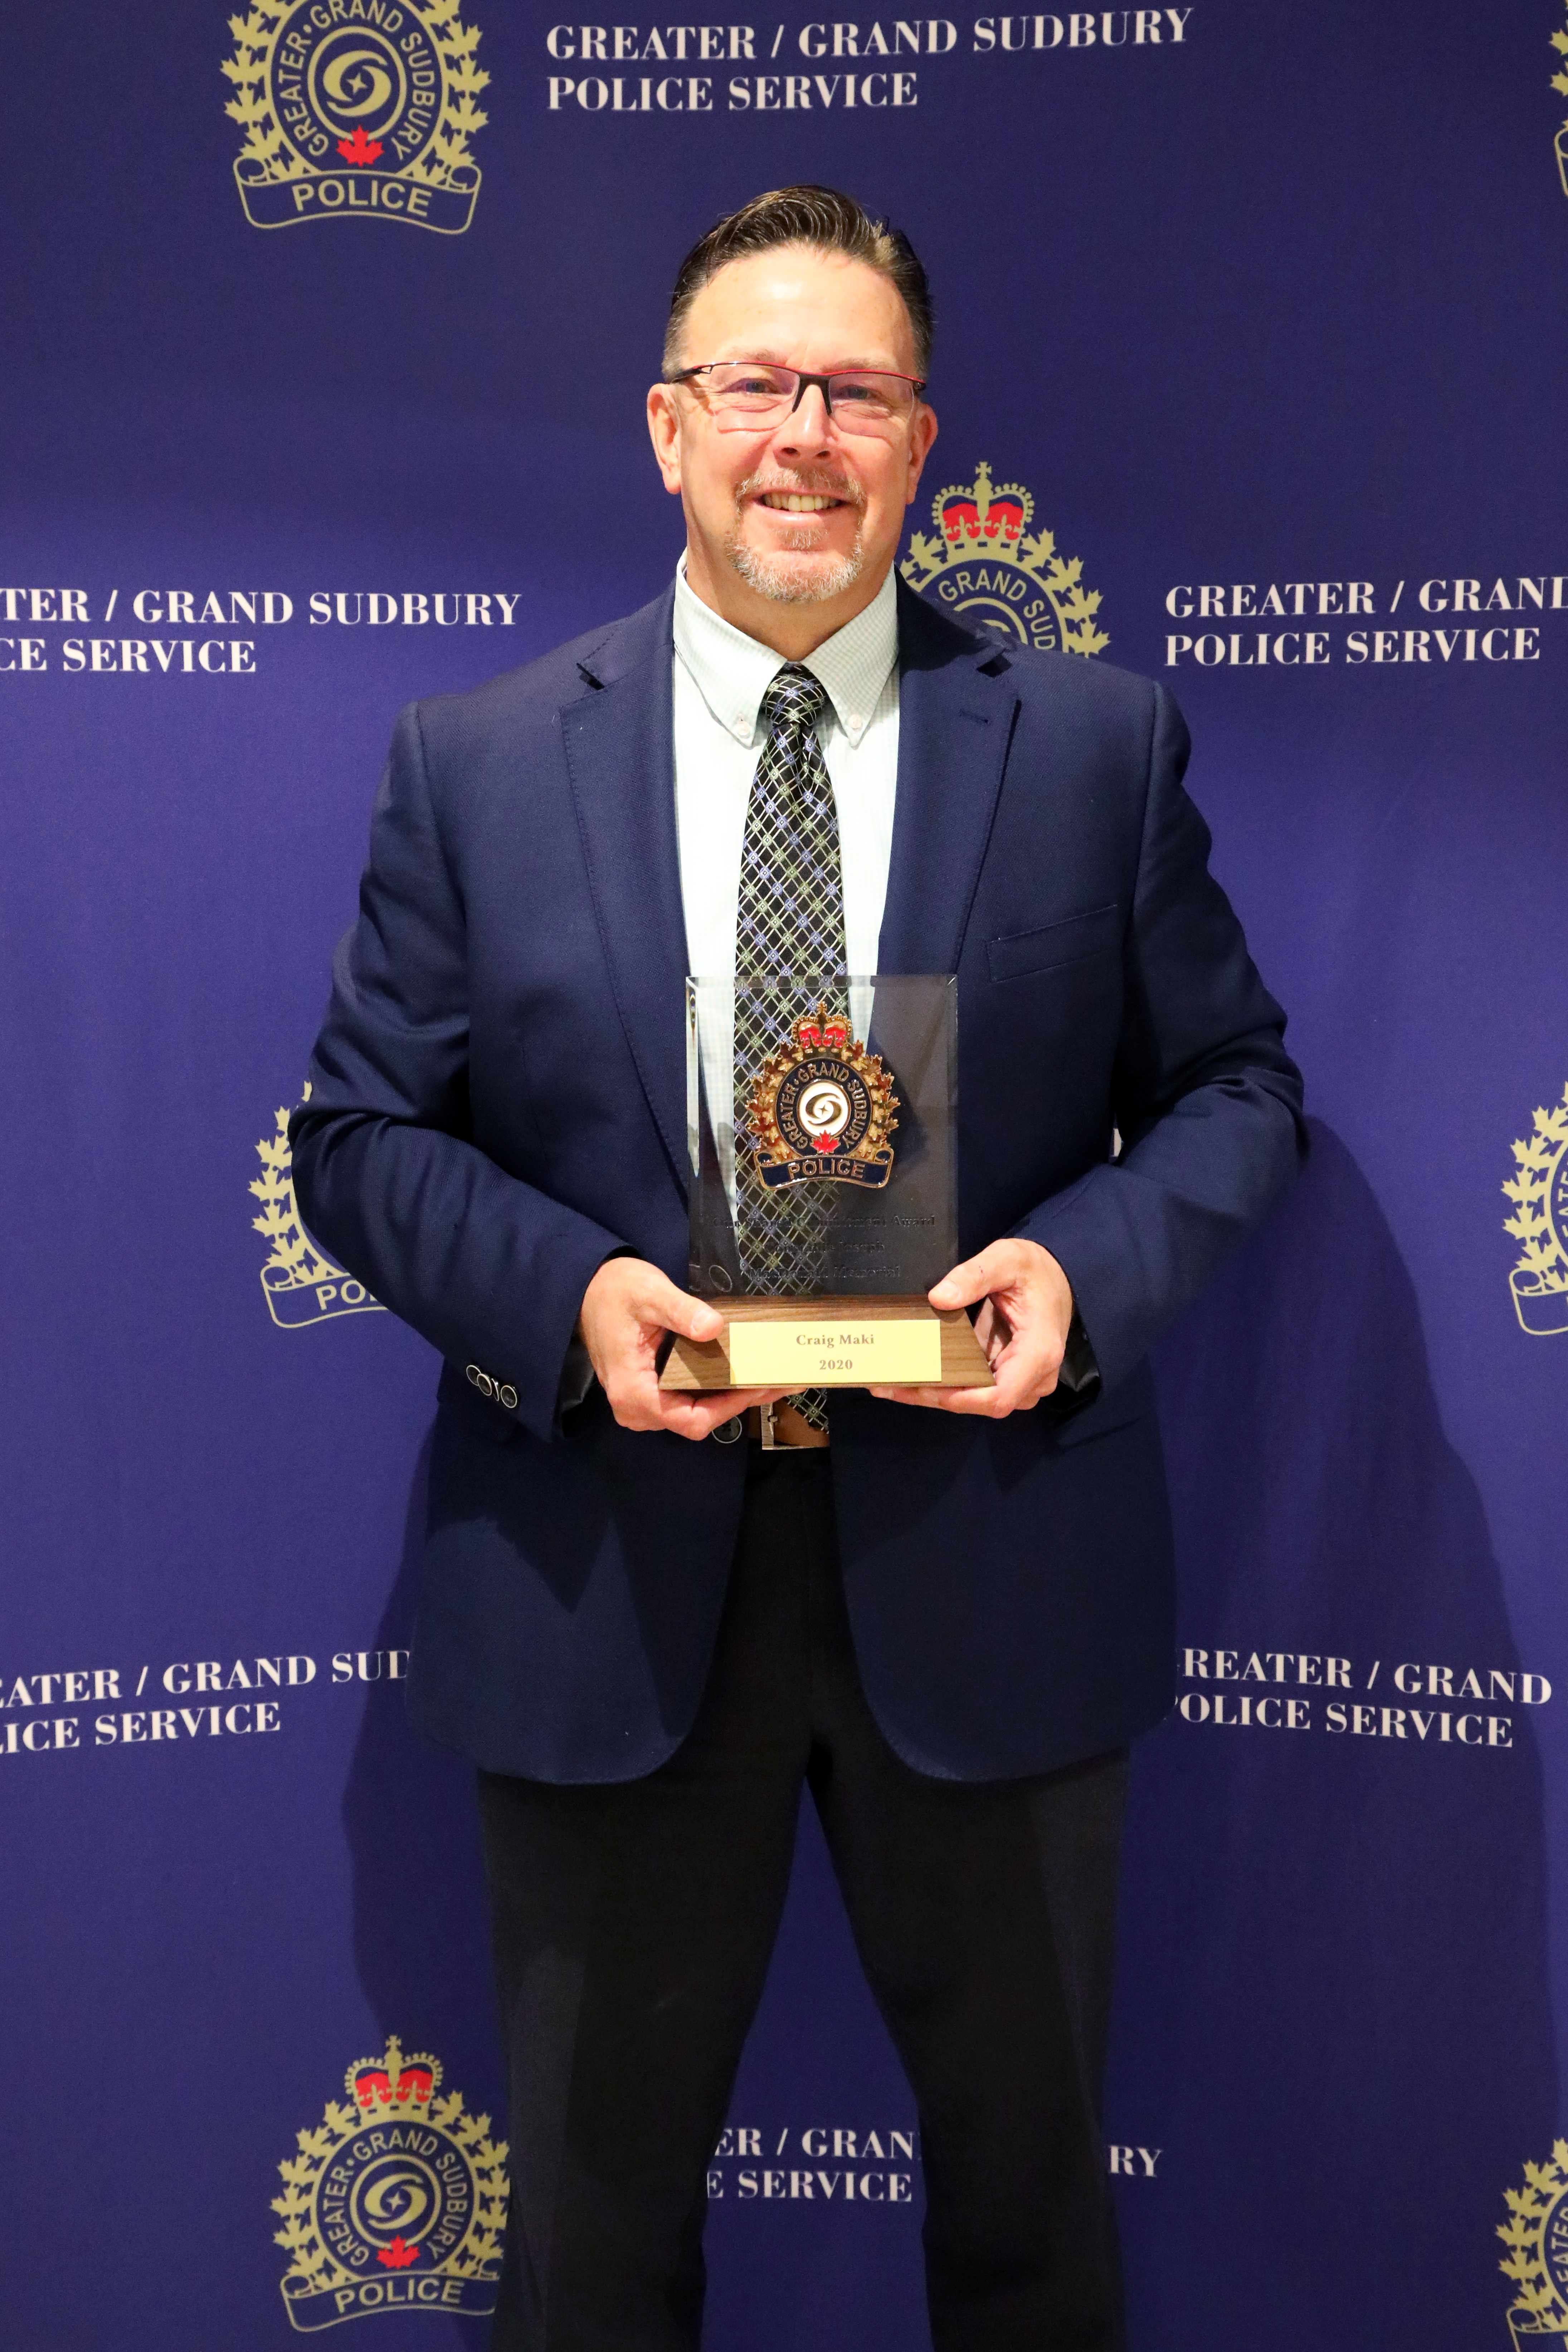 man smiling and holding award